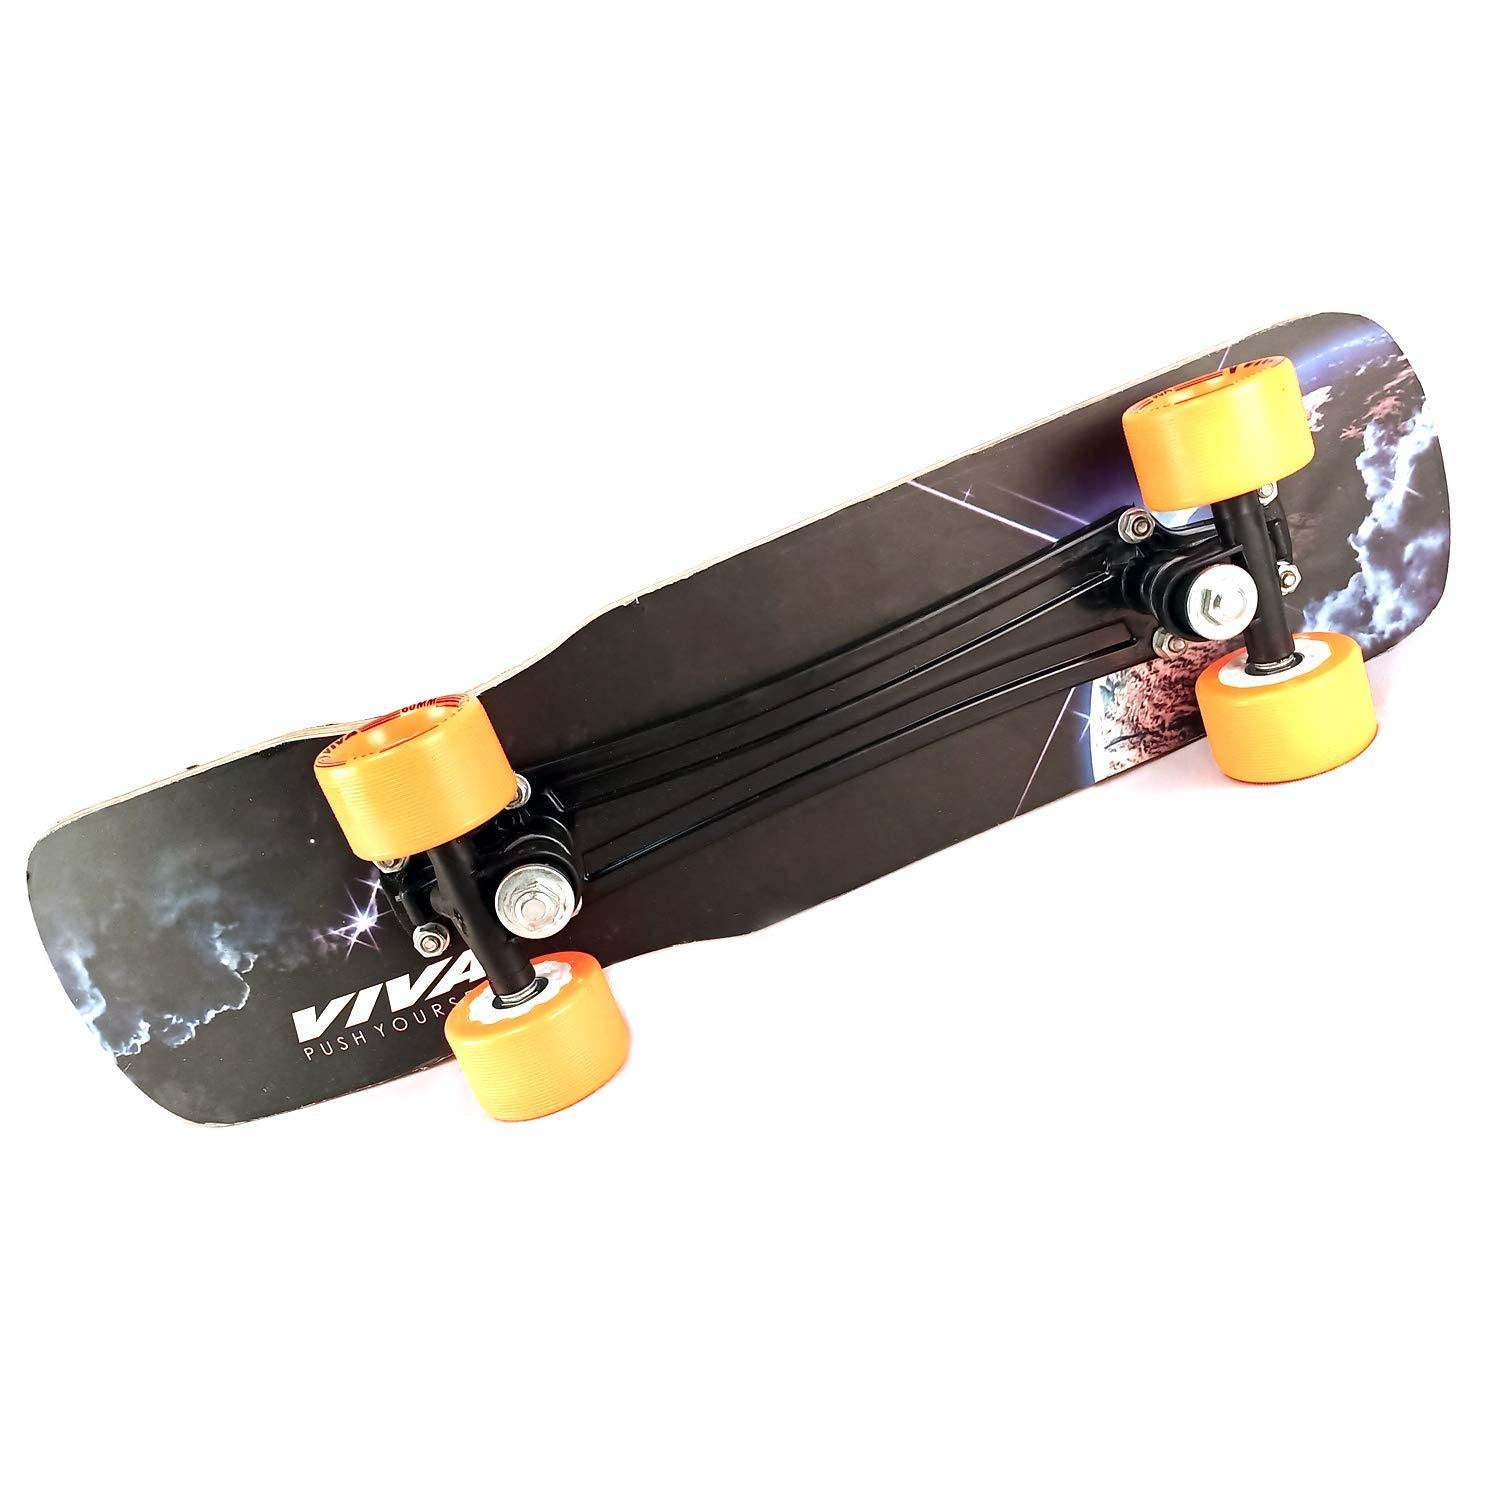 VIVA Wooden Skateboard With Anti Skid Surface - Senior - Best Price online Prokicksports.com